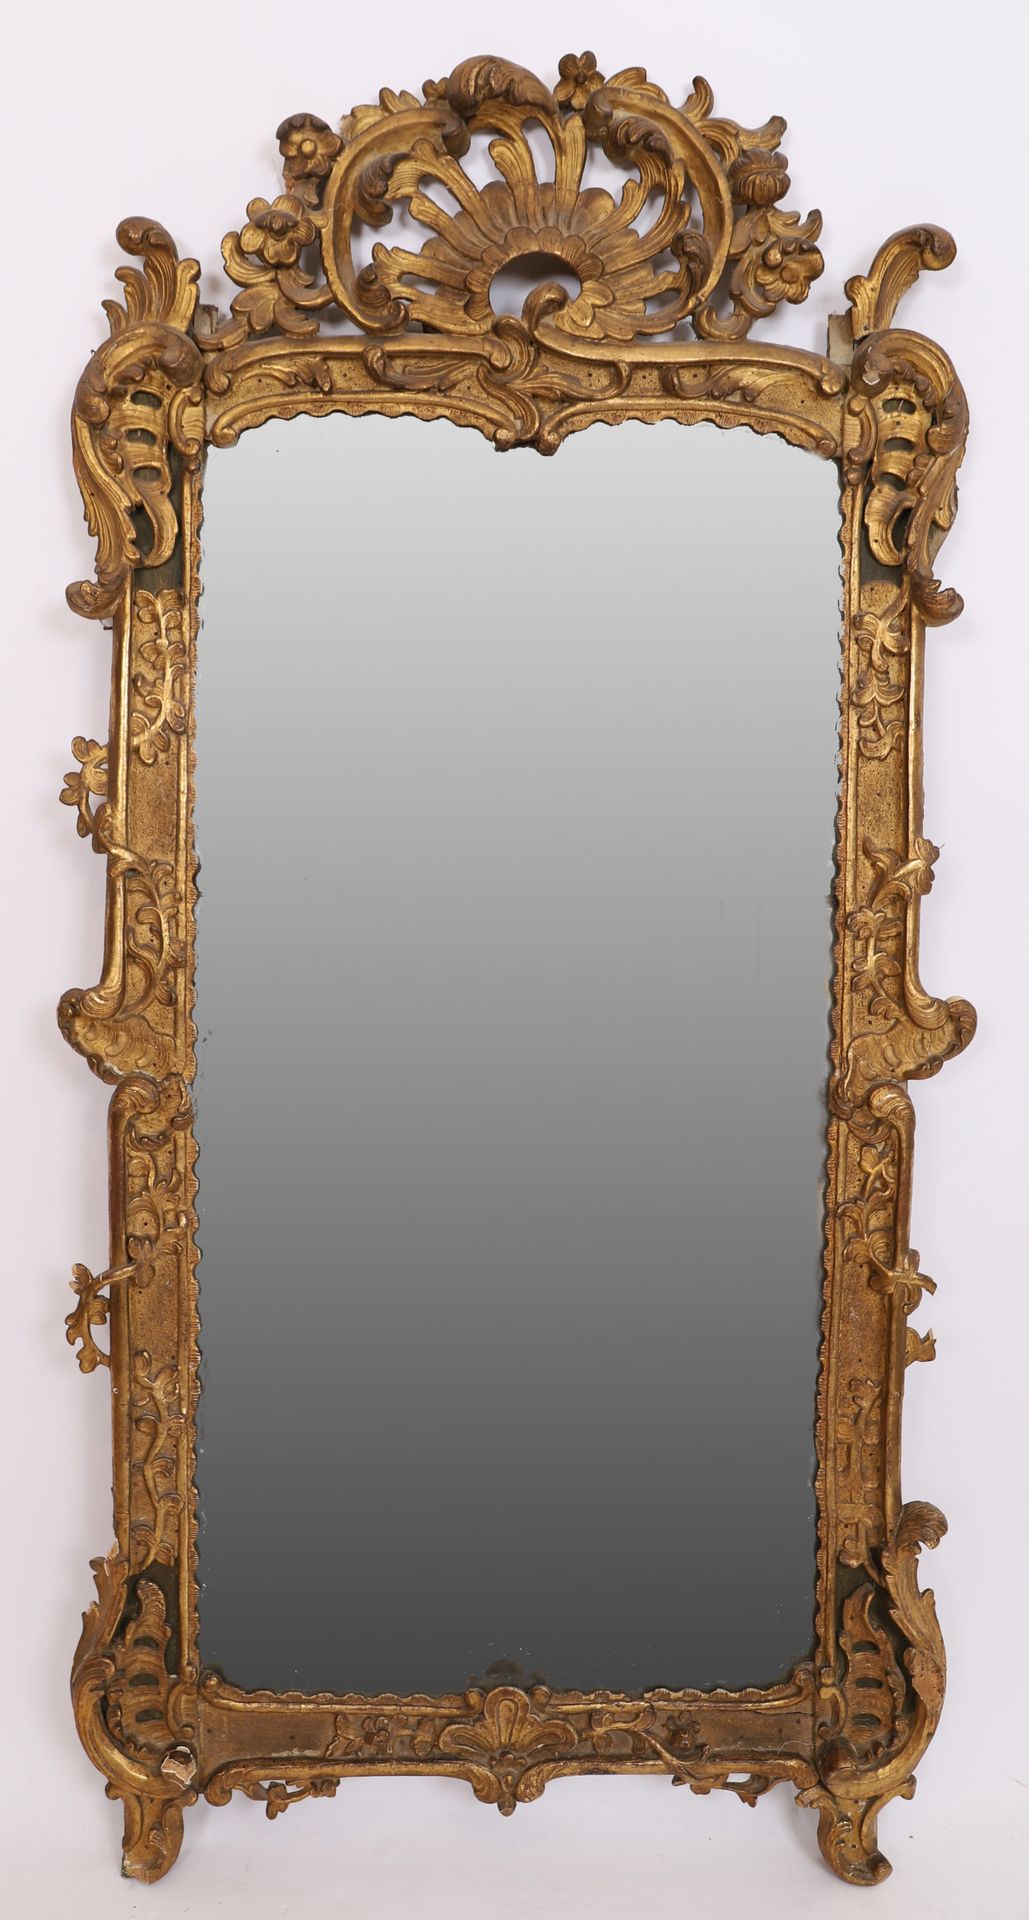 Null 一面重要的摄政时期鎏金木镜子
丰富的镀金木雕，有钉子和刺桐叶的图案，有镂空的门楣
18世纪时期
178 x 88 cm
修复和维护